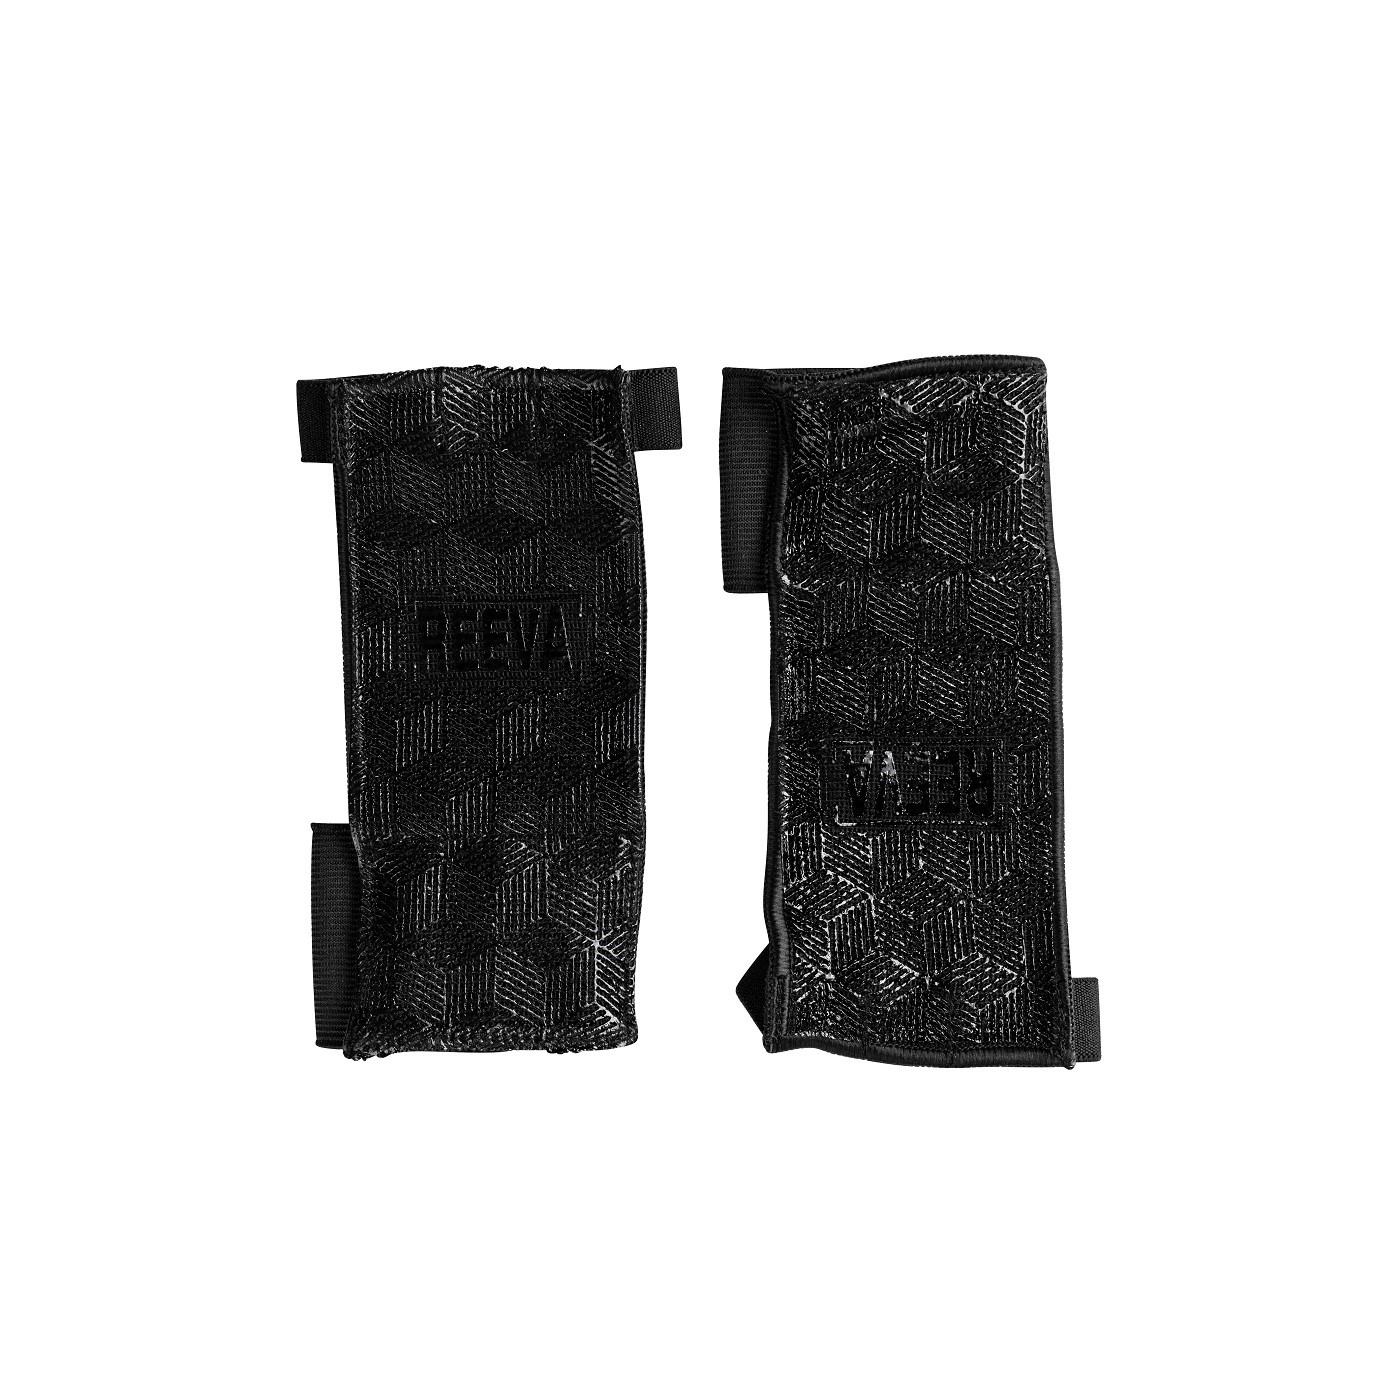 Reeva Ultra Feel Crossfit Handschoenen - S